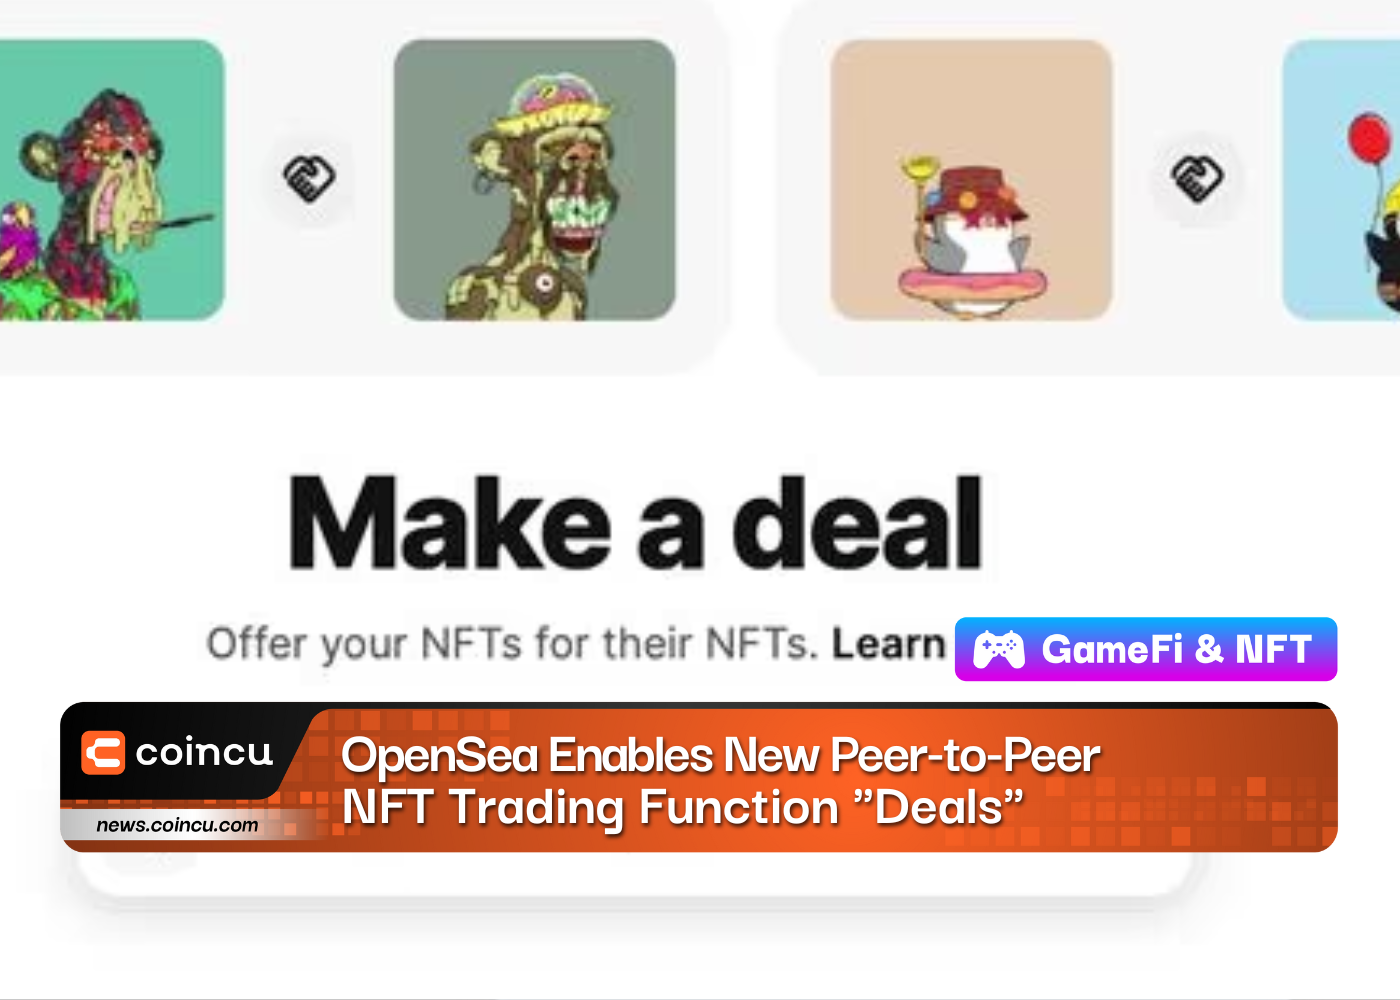 OpenSea Enables New Peer-to-Peer NFT Trading Function "Deals"